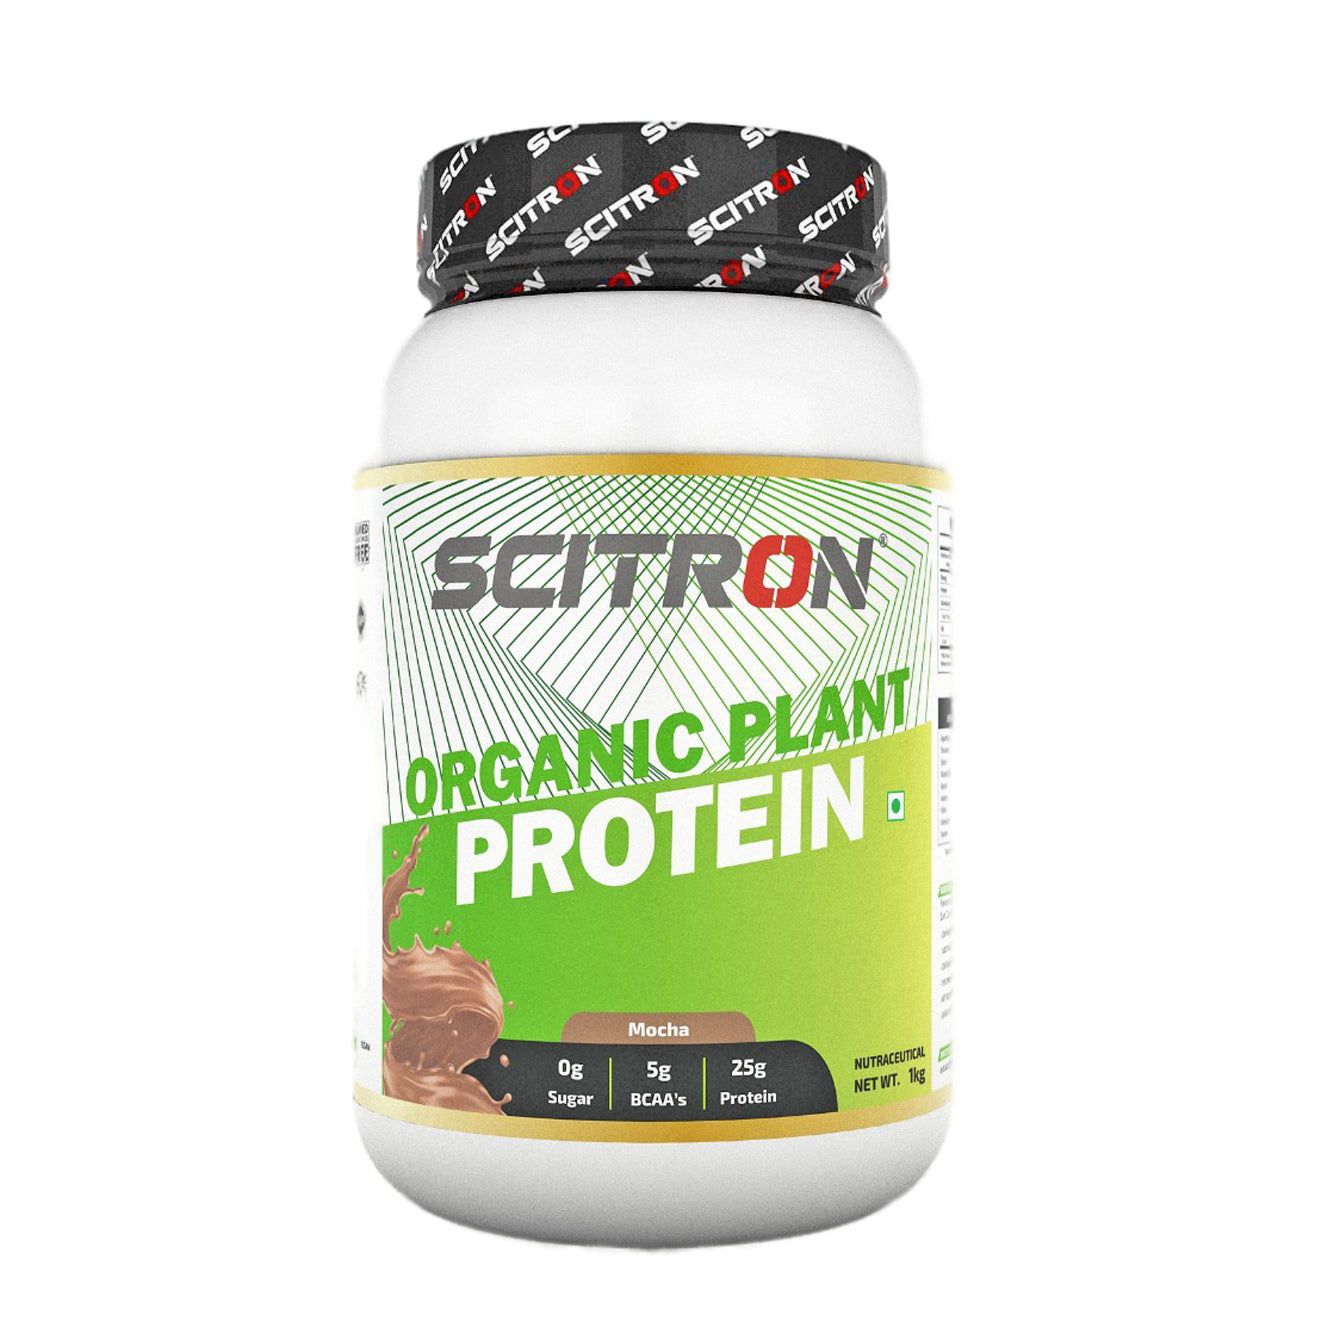 SCITRON ORGANIC PLANT Protein